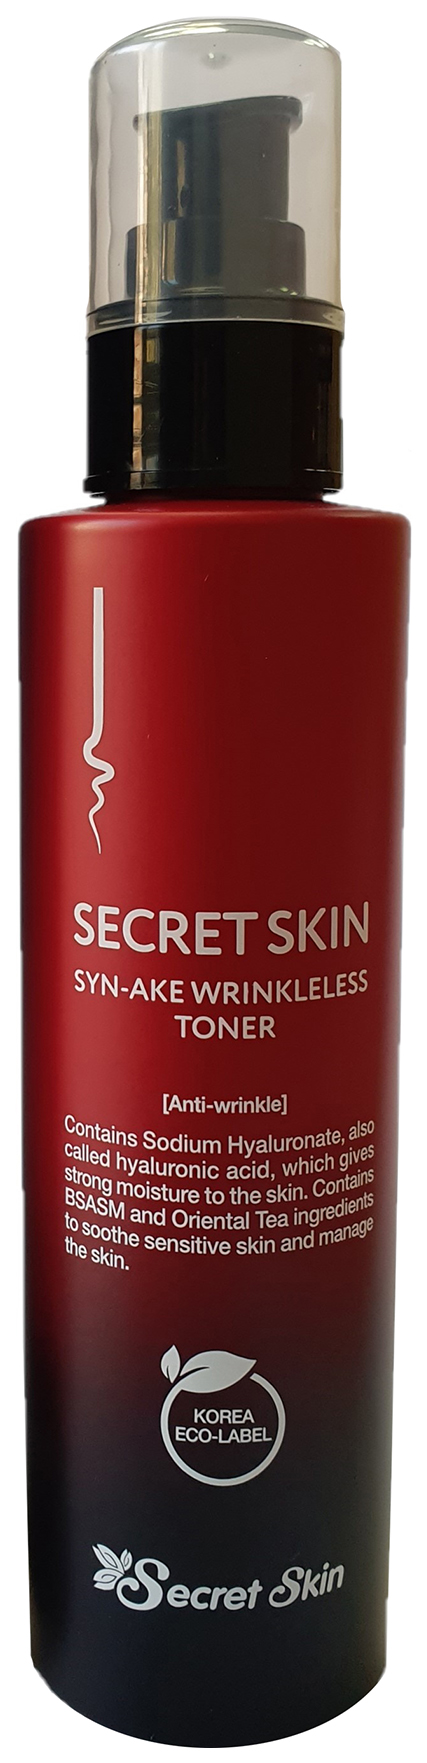 Тонер Secret Skin Syn-Ake Wrinkleless Toner с пептидами змеиного яда 150 мл тонер secret skin со змеиным пептидом syn ake wrinkleless toner